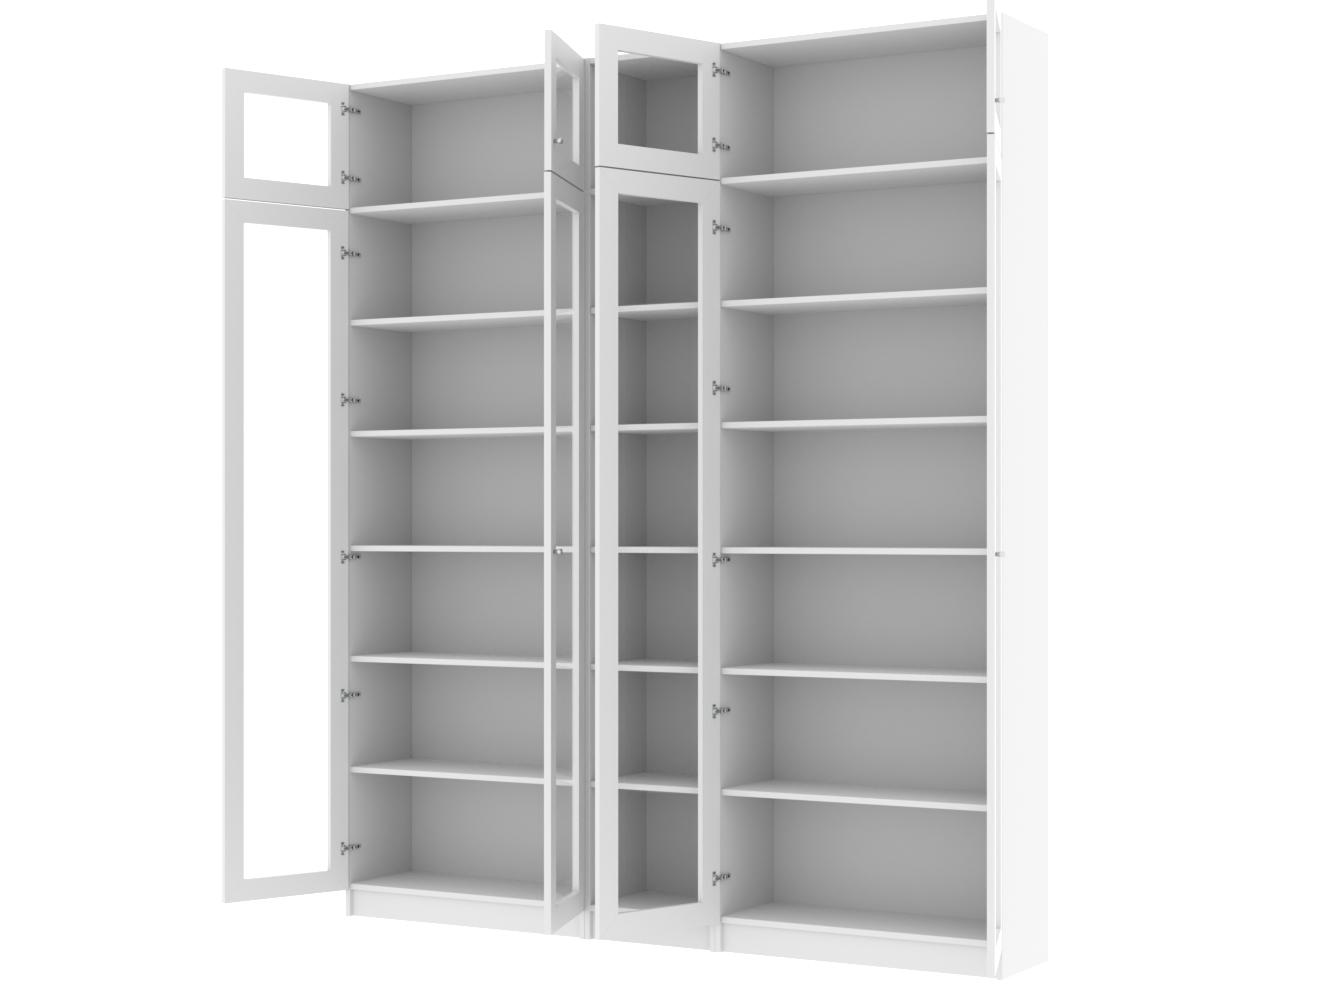  Книжный шкаф Билли 399 white ИКЕА (IKEA) изображение товара